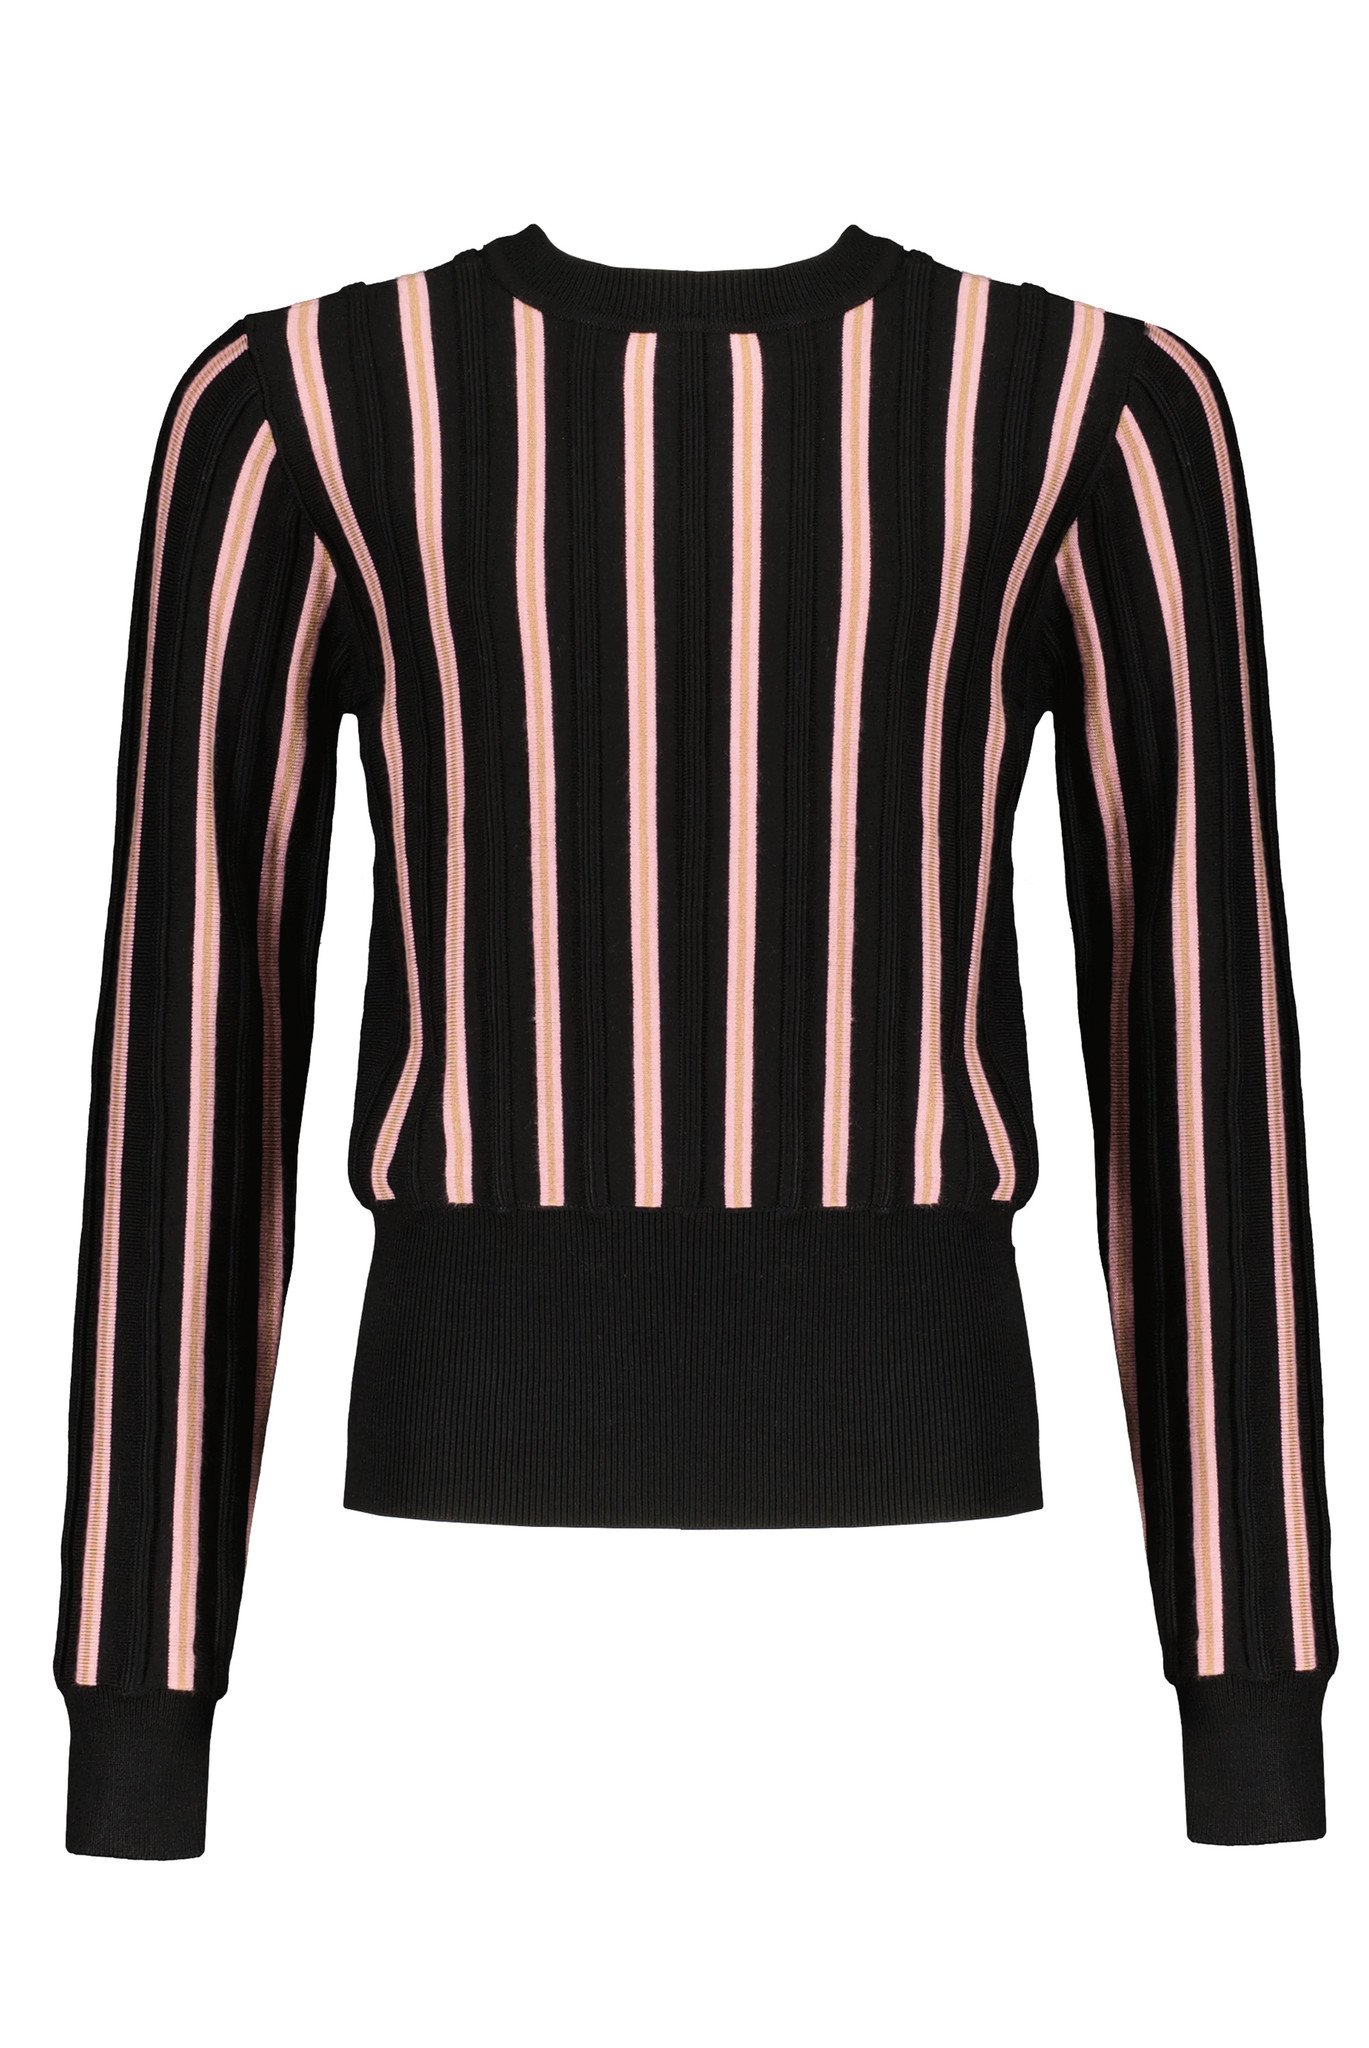 NoBell meiden gebreide sweater Kamilla vertical striped Lychee